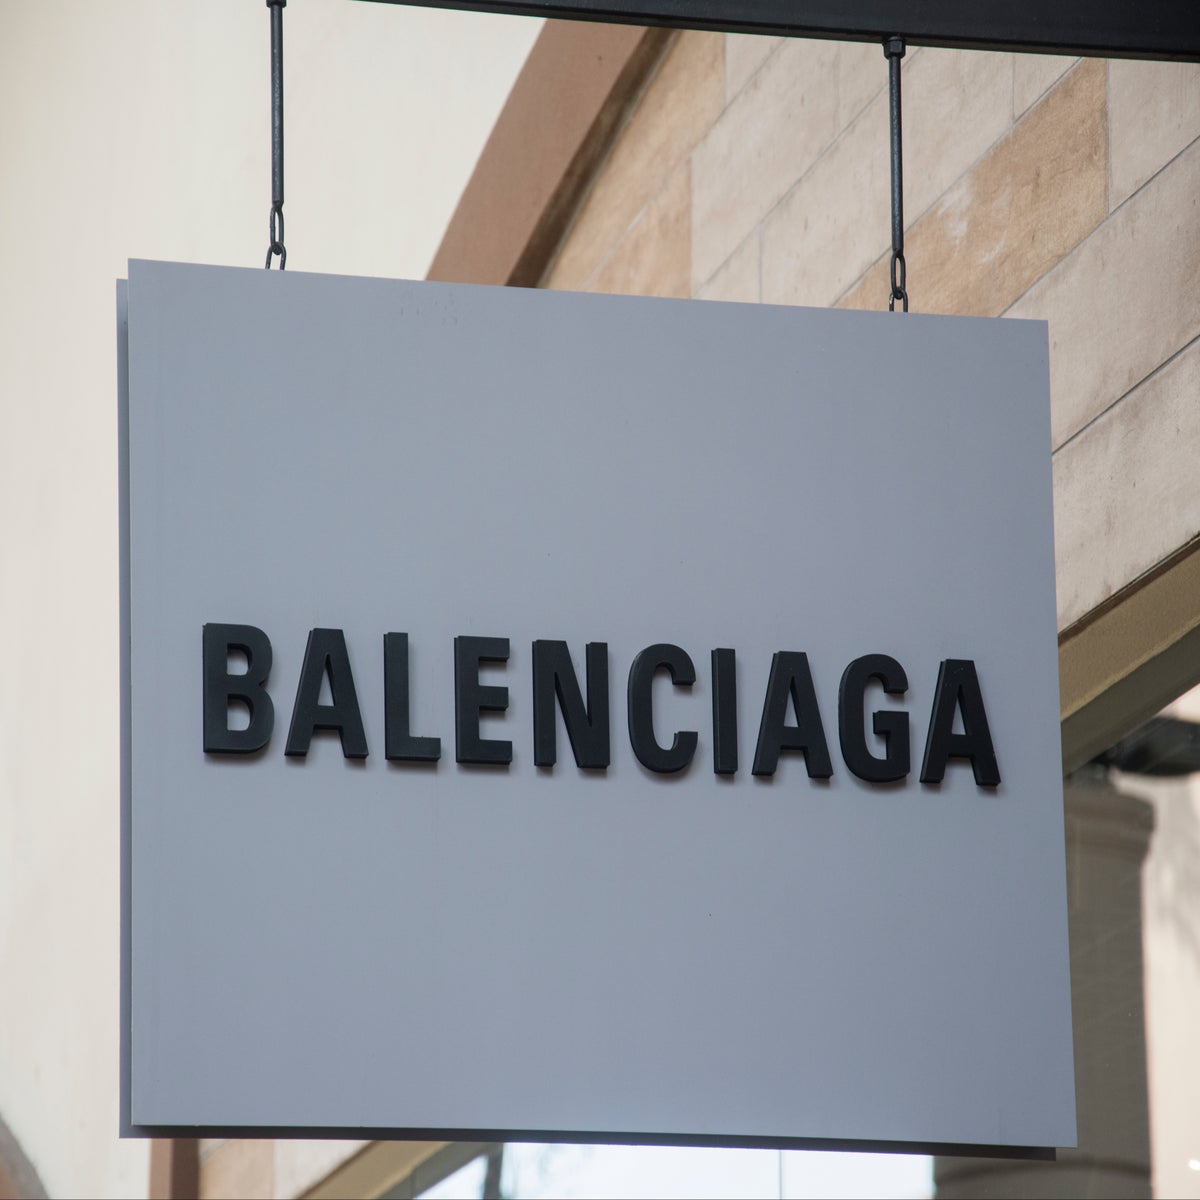 Balenciaga addresses controversial ad campaign